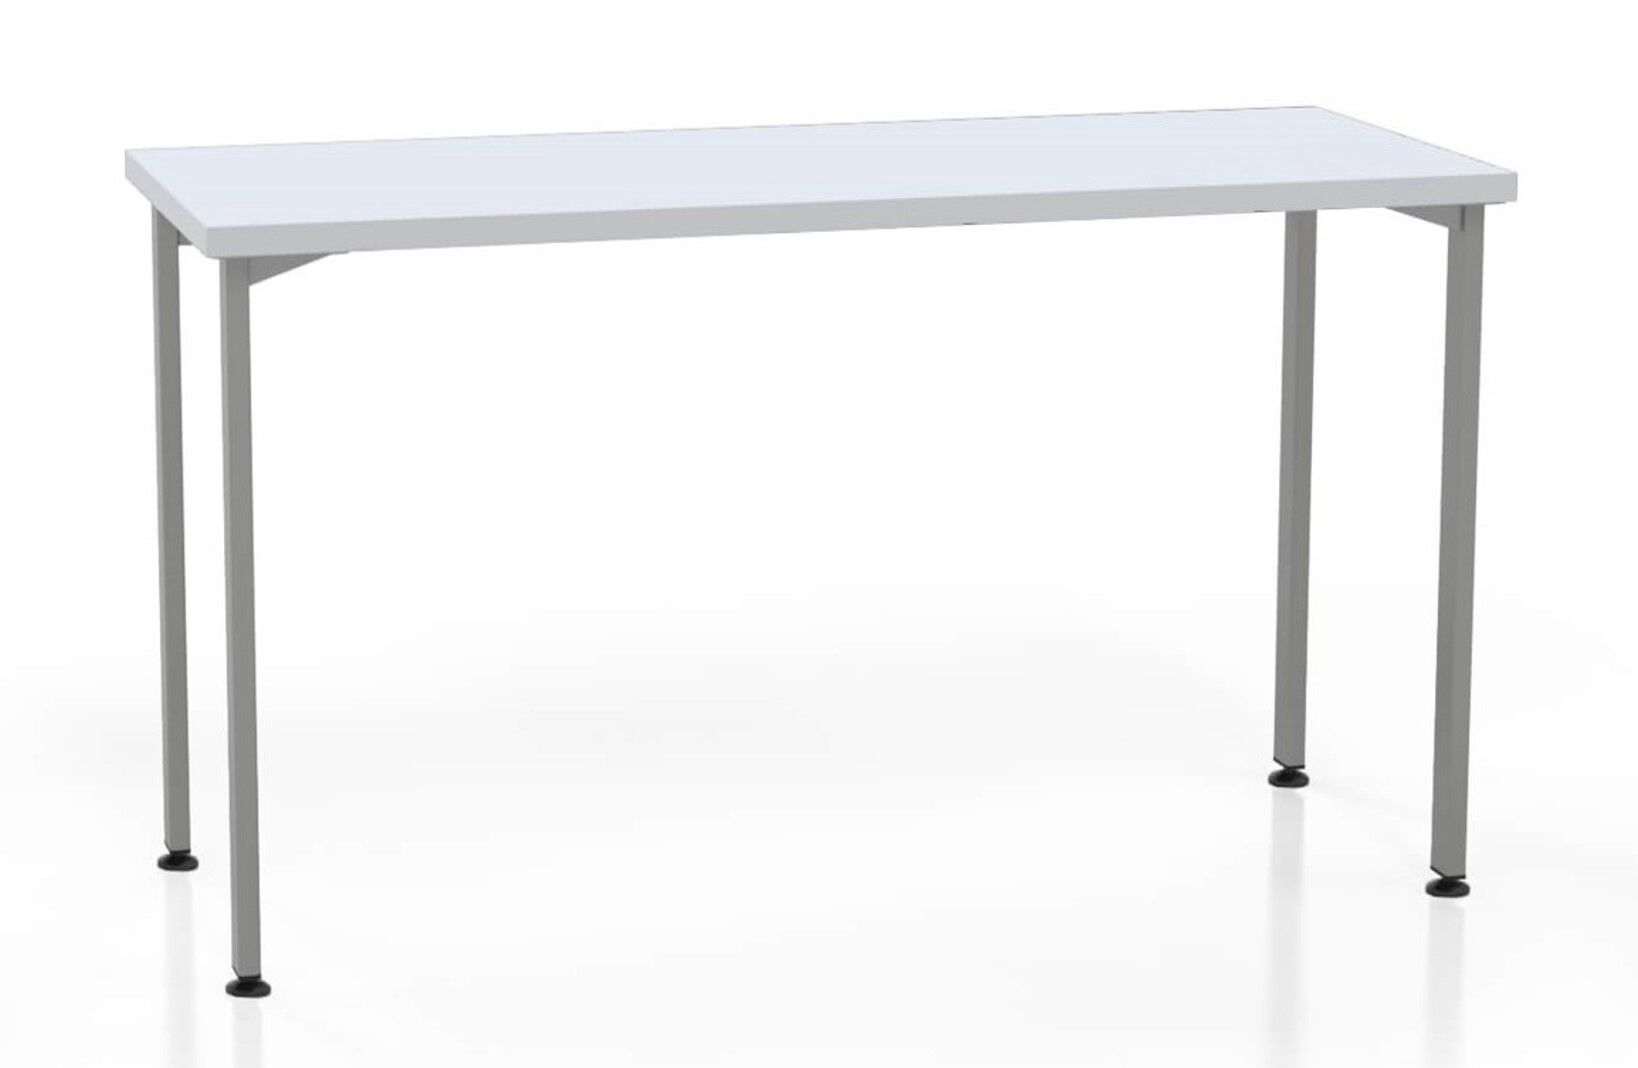 L shaped desks for home office wall mobile pedestal desk_preview